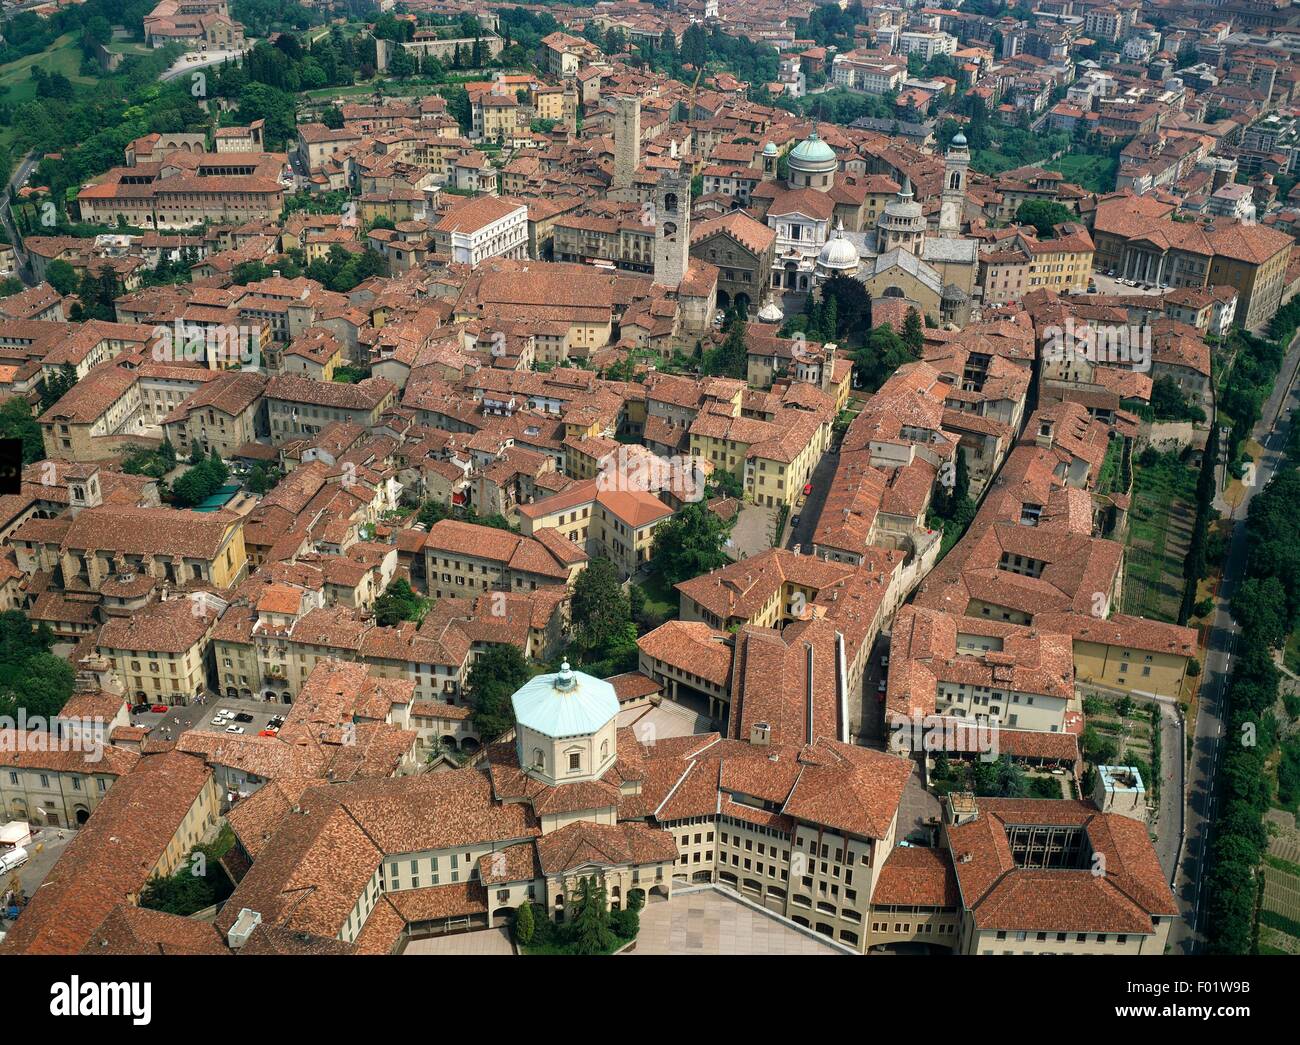 Aerial view of Pavia - Lombardy region, Italy Stock Photo - Alamy